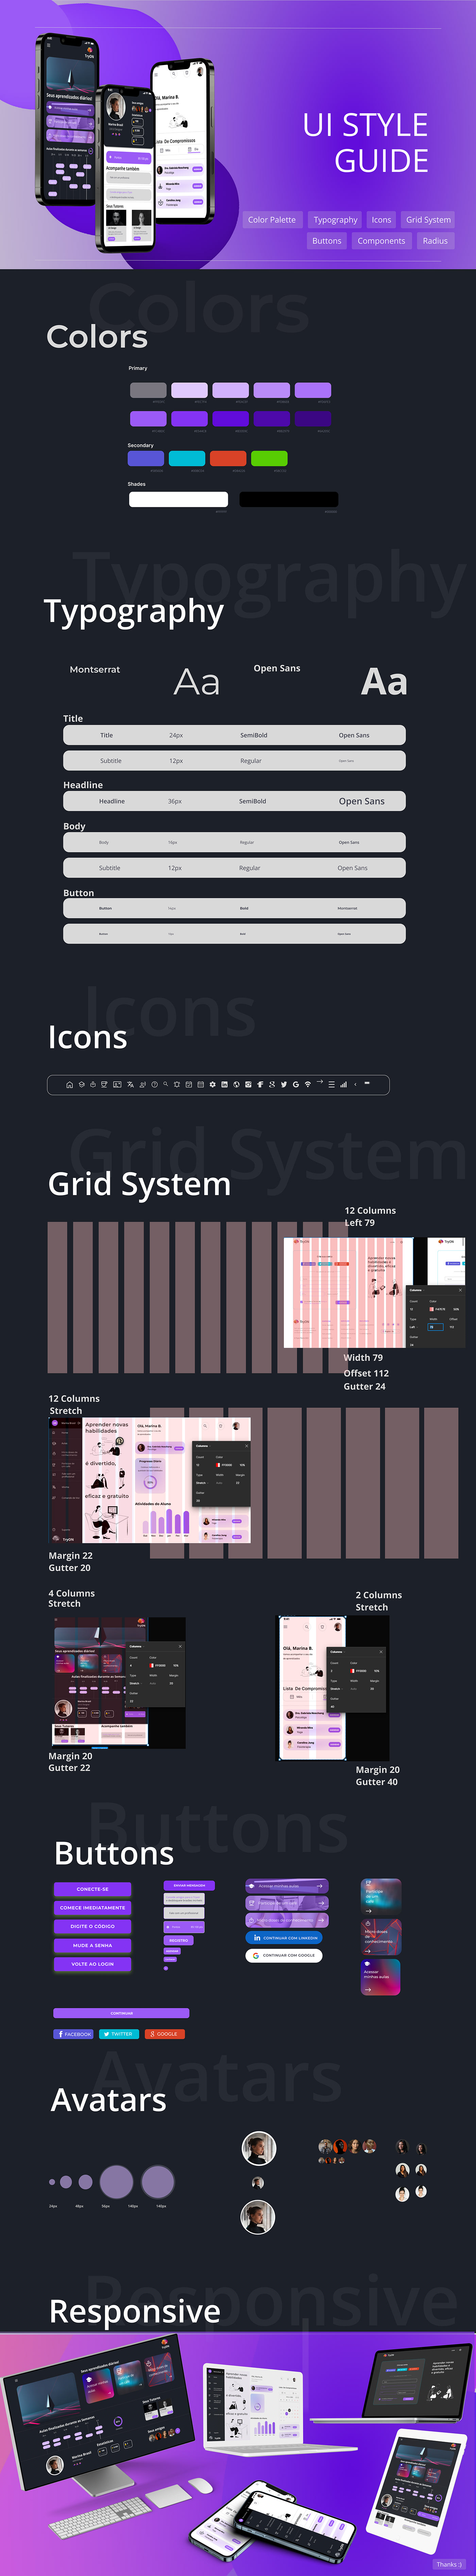 bottons Figma gridsystem landing page Mobile app Responsive Design styleguide typography   UI/UX uikit